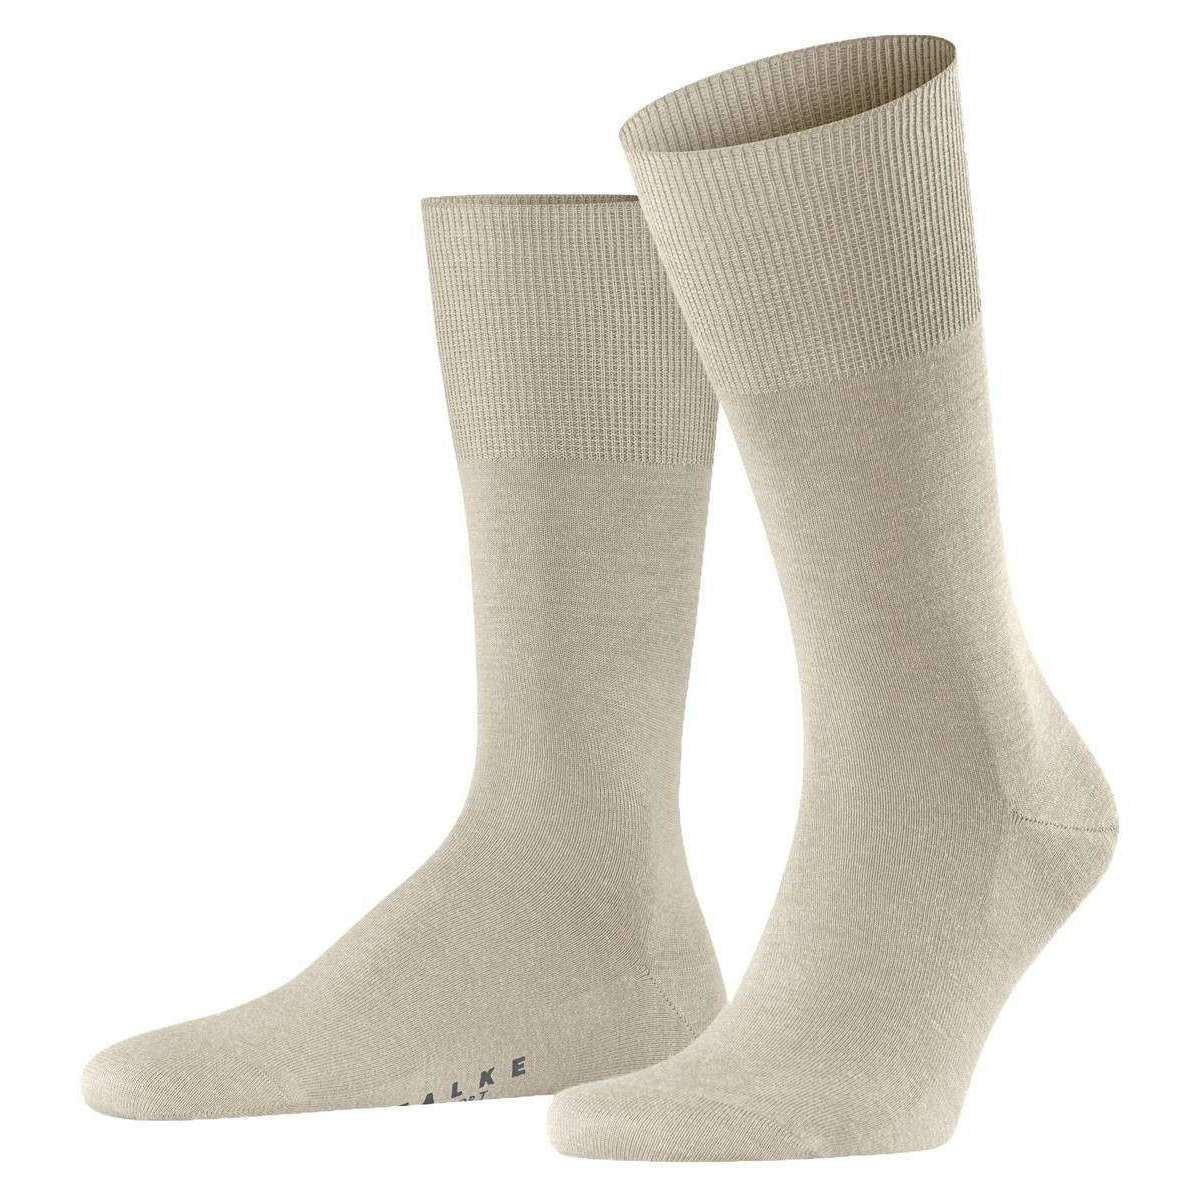 Falke Airport Socks - Beige - Extra Small - 5.5-6.5 UK | 6.5-7.5 US | 39-40 EUR